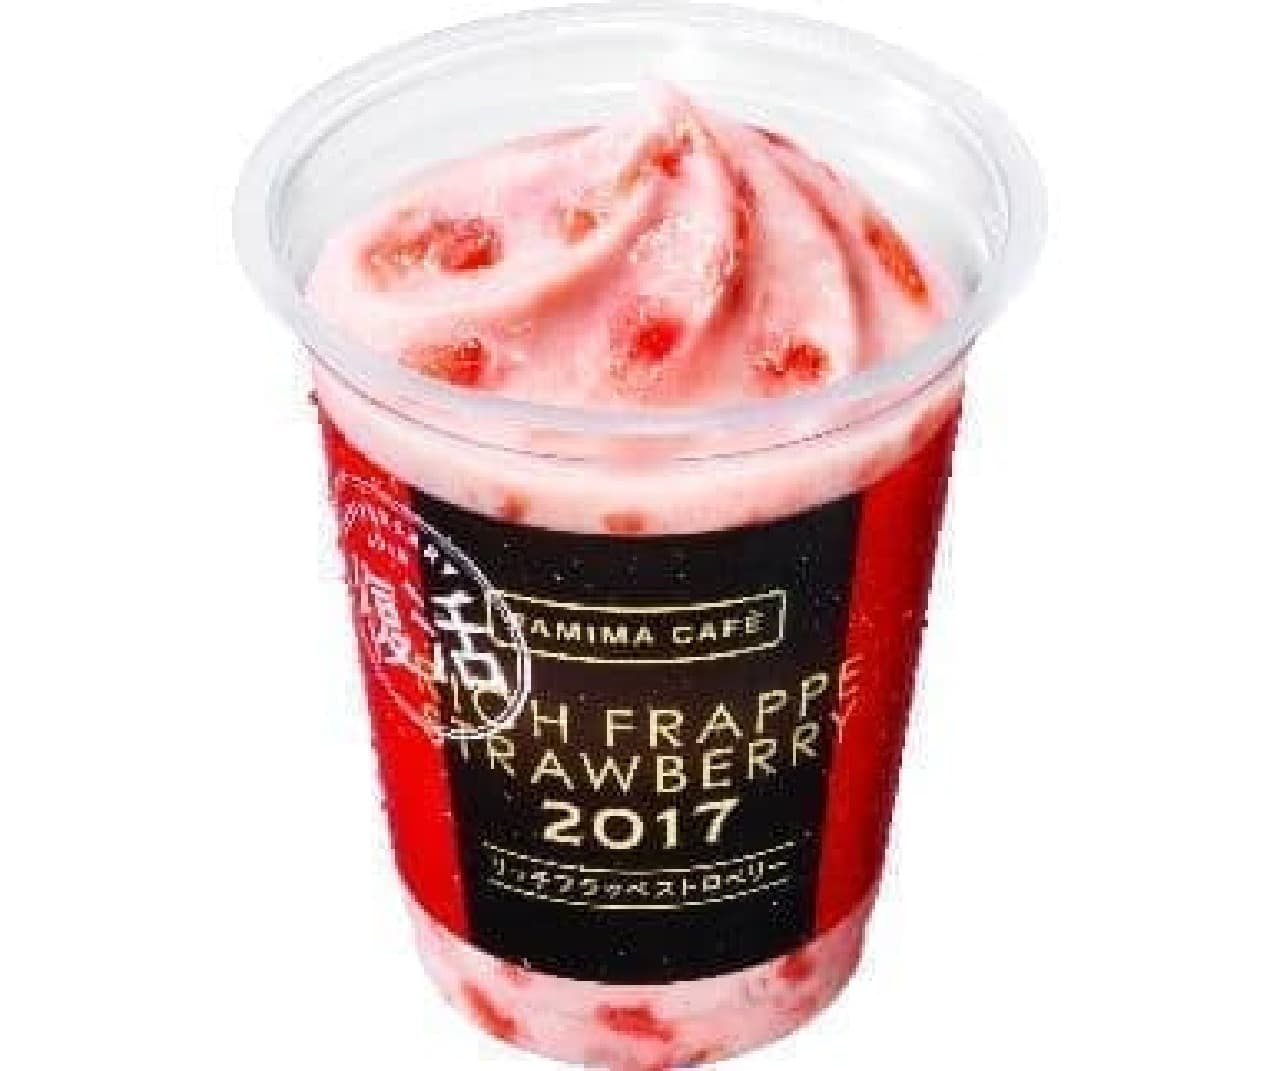 FamilyMart "Rich Frappe Strawberry 2017"